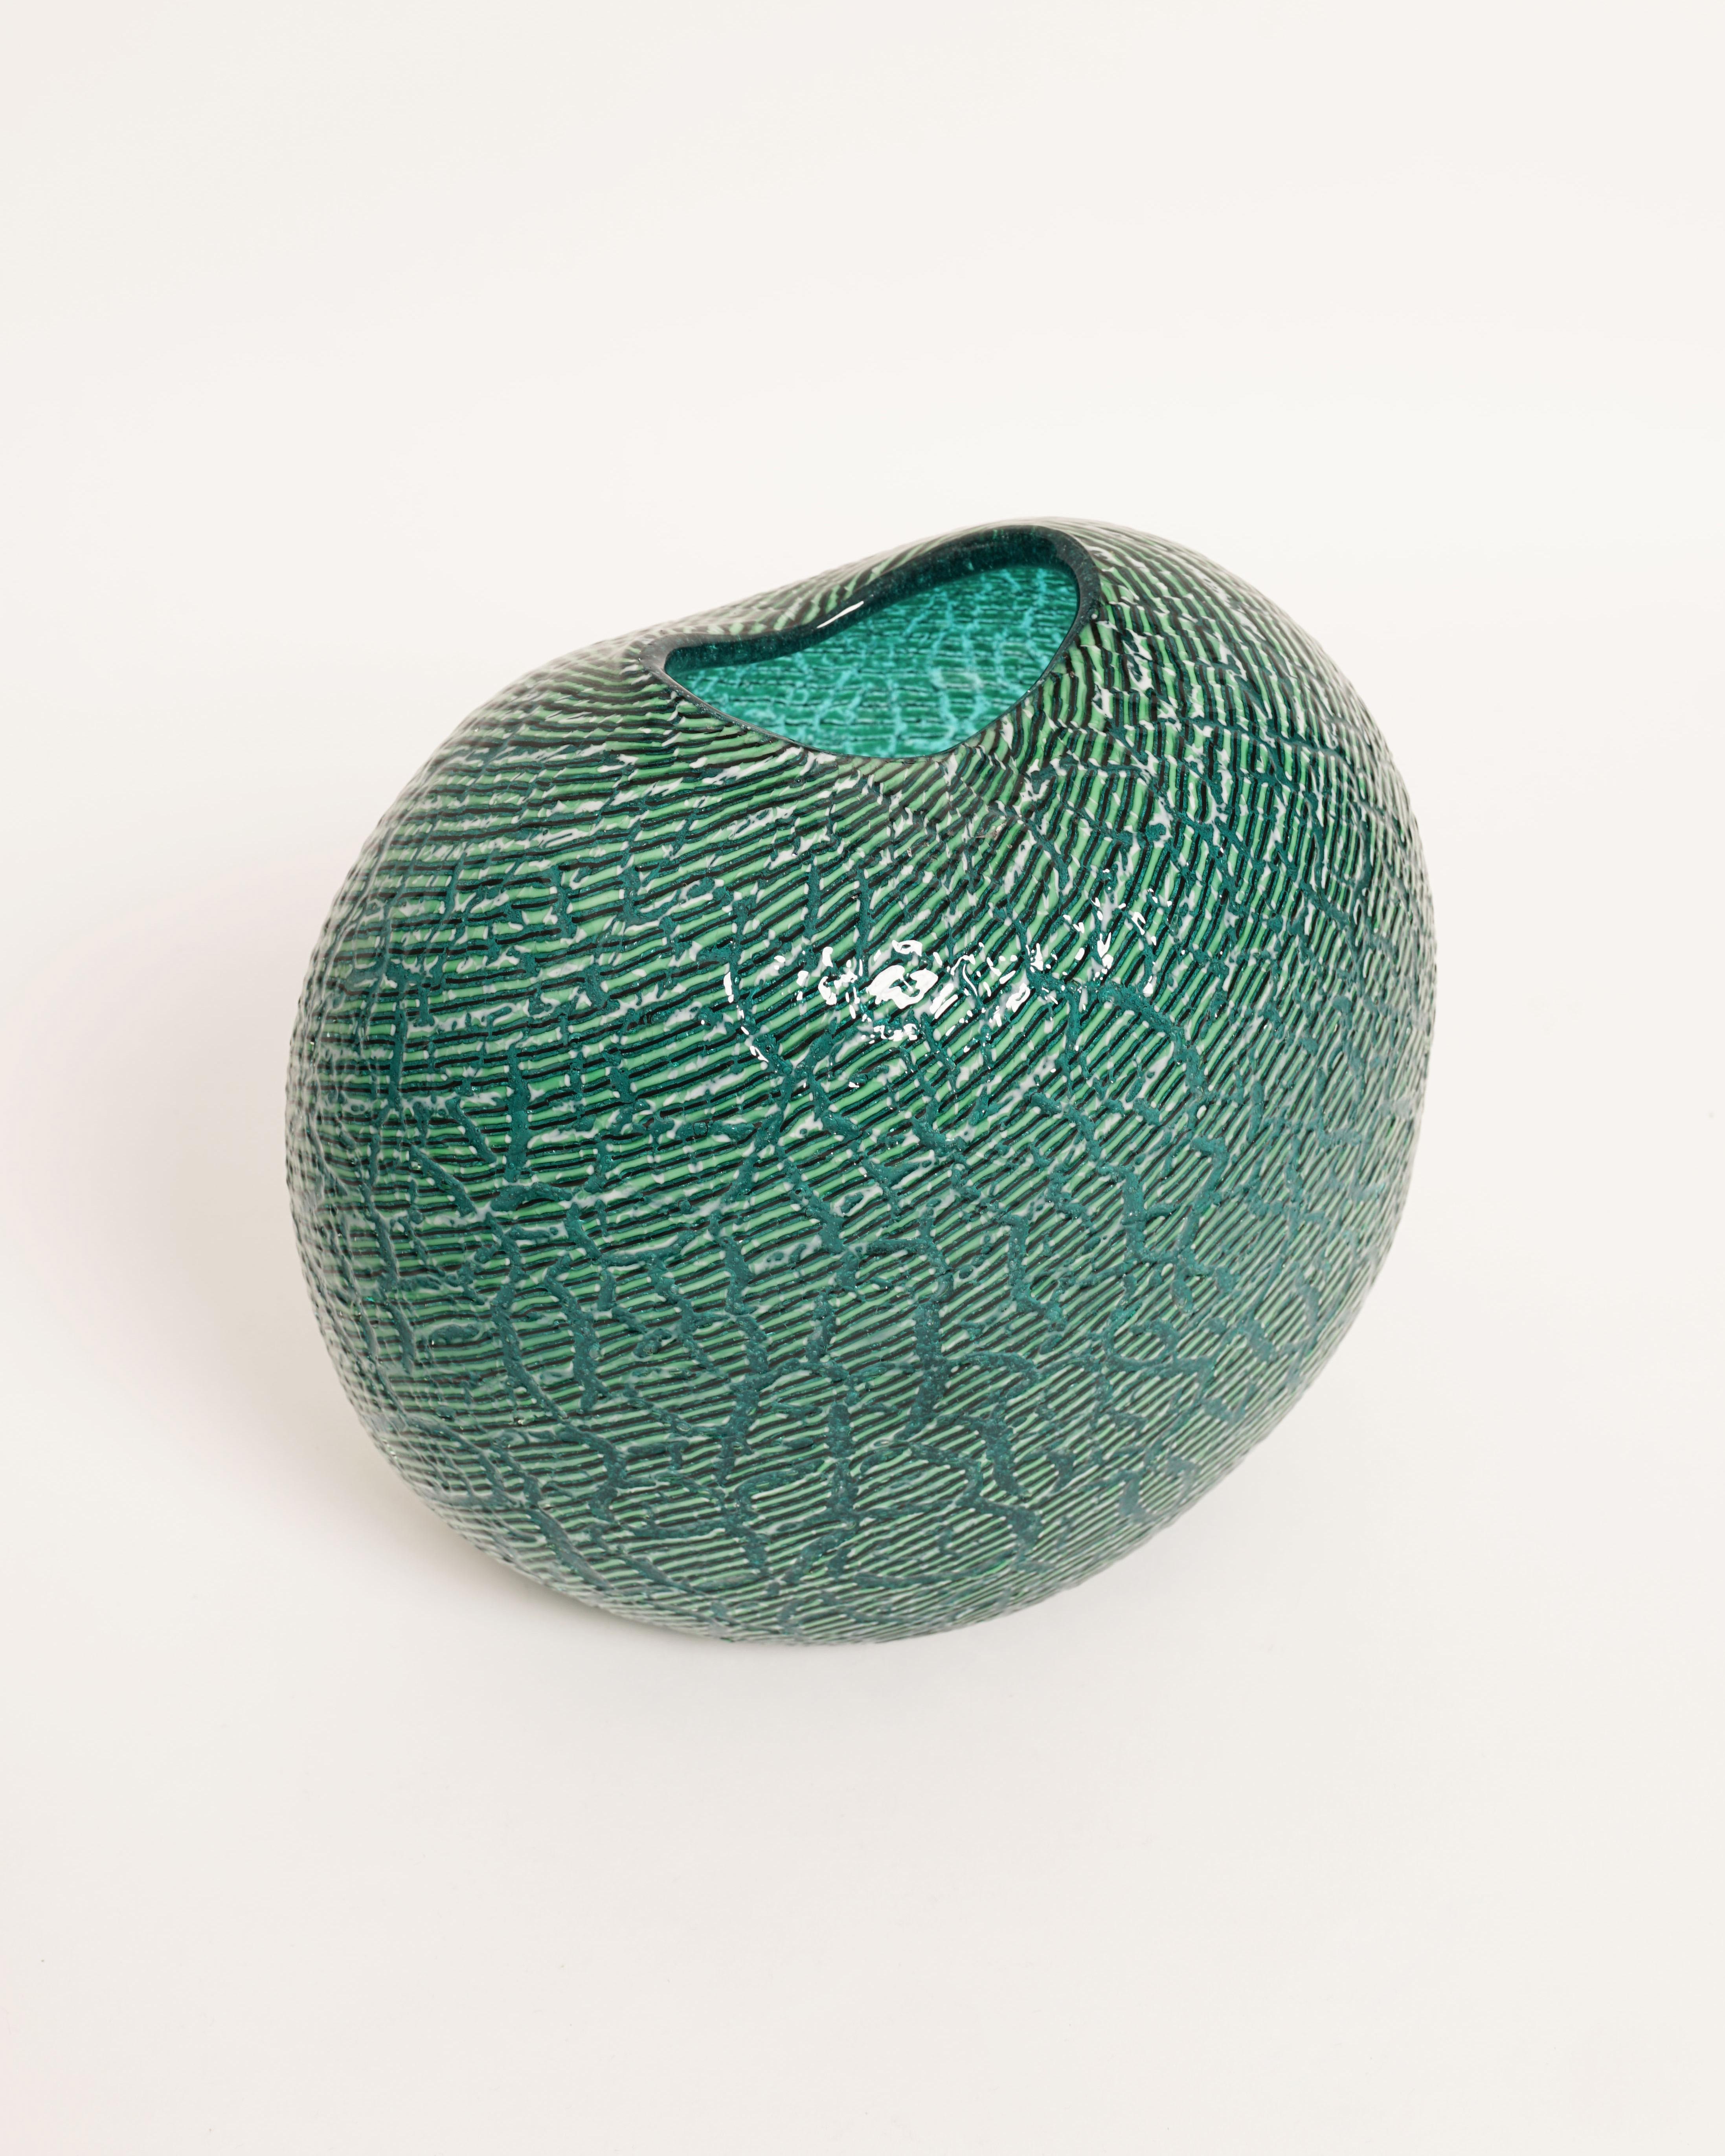 Lino Tagliapietra (né en 1934)
Vase en verre soufflé vert et bleu 
Signé Lino Tagliapietra Murano
Marqué : Lino Tagliapietra 
H : 25 cm (9.8